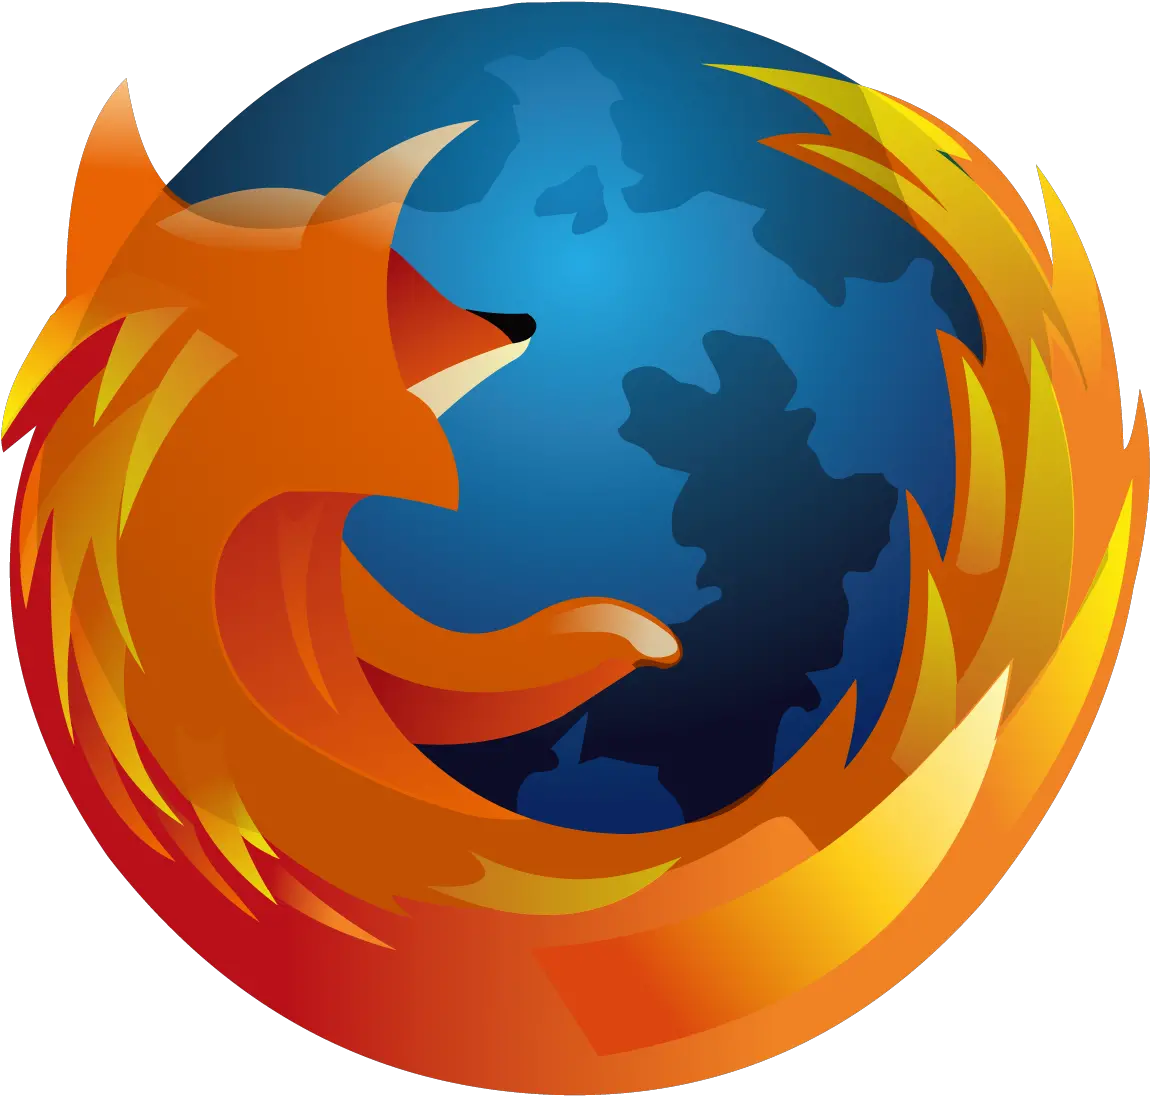 Mozilla Firefox Logo Vector Png Image Chrome Mozilla Firefox Chrome Internet Explorer Vector Internet Explorer Icon